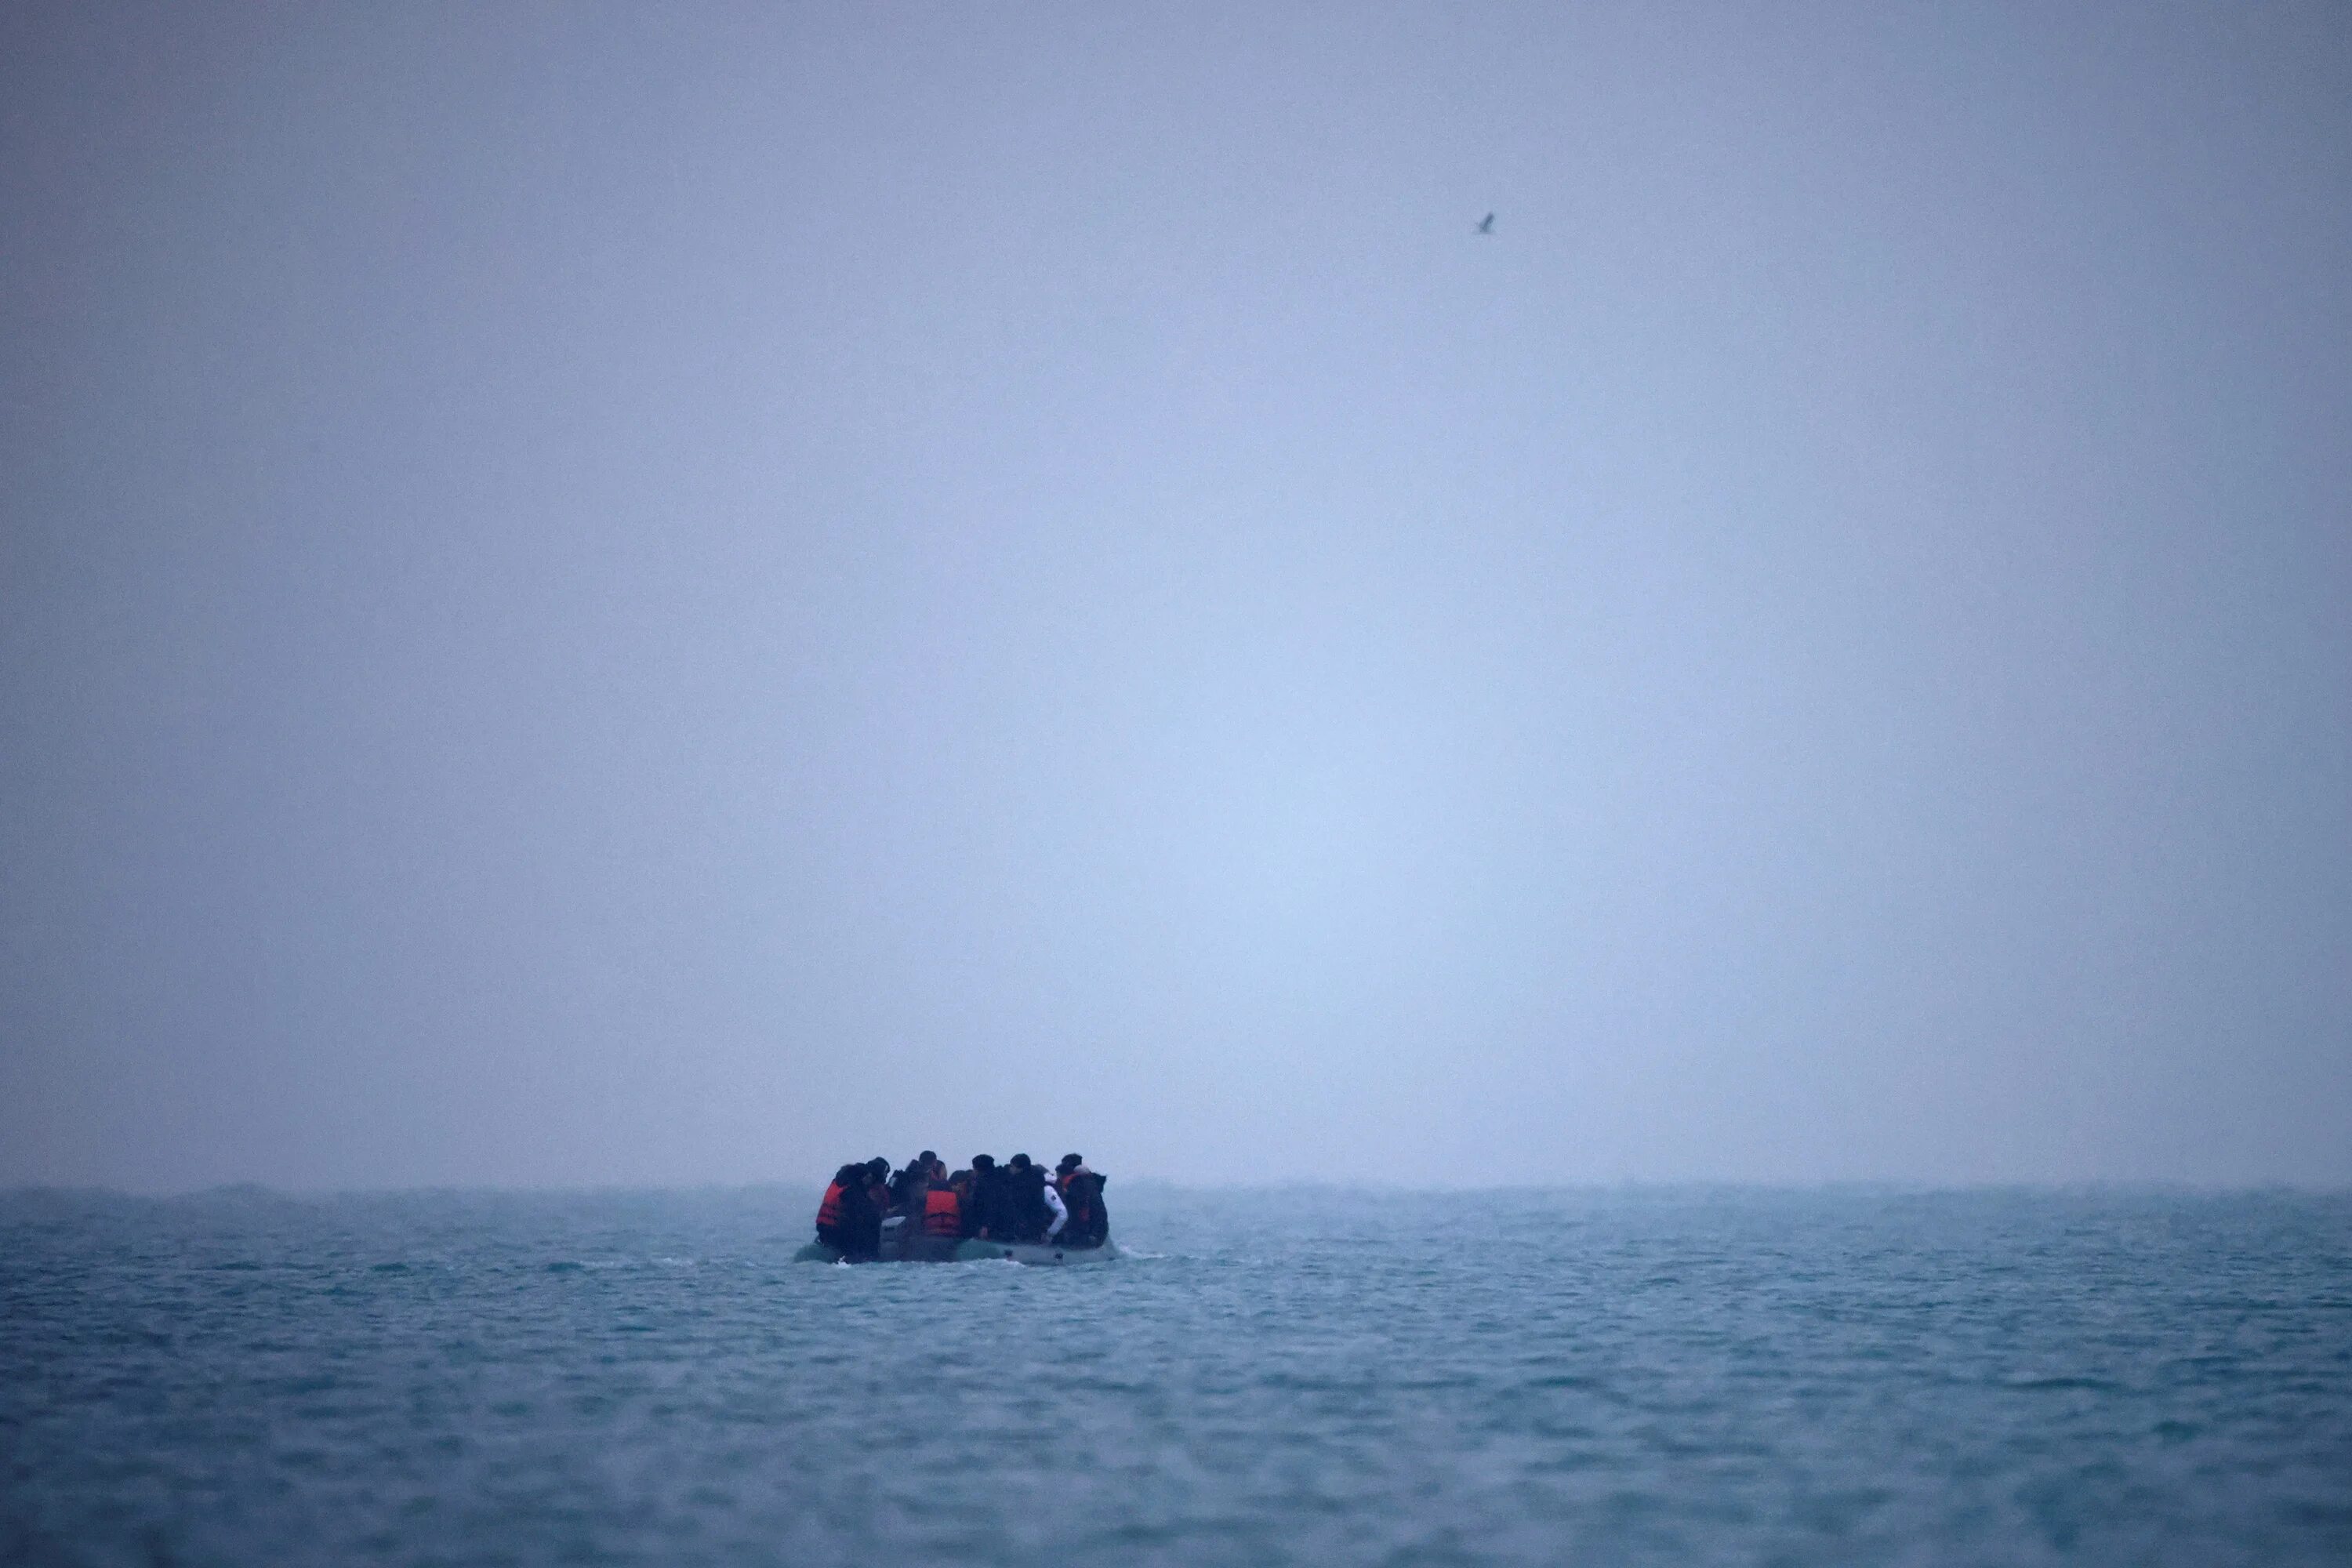 Смотрит коршунов в море тонет. Мигранты на лодках. В ла-Манше потерпела крушение лодка с мигрантами. Крушение судна с мигрантами у берегов Греции фото. С парома, пересекающего ла-Манш.